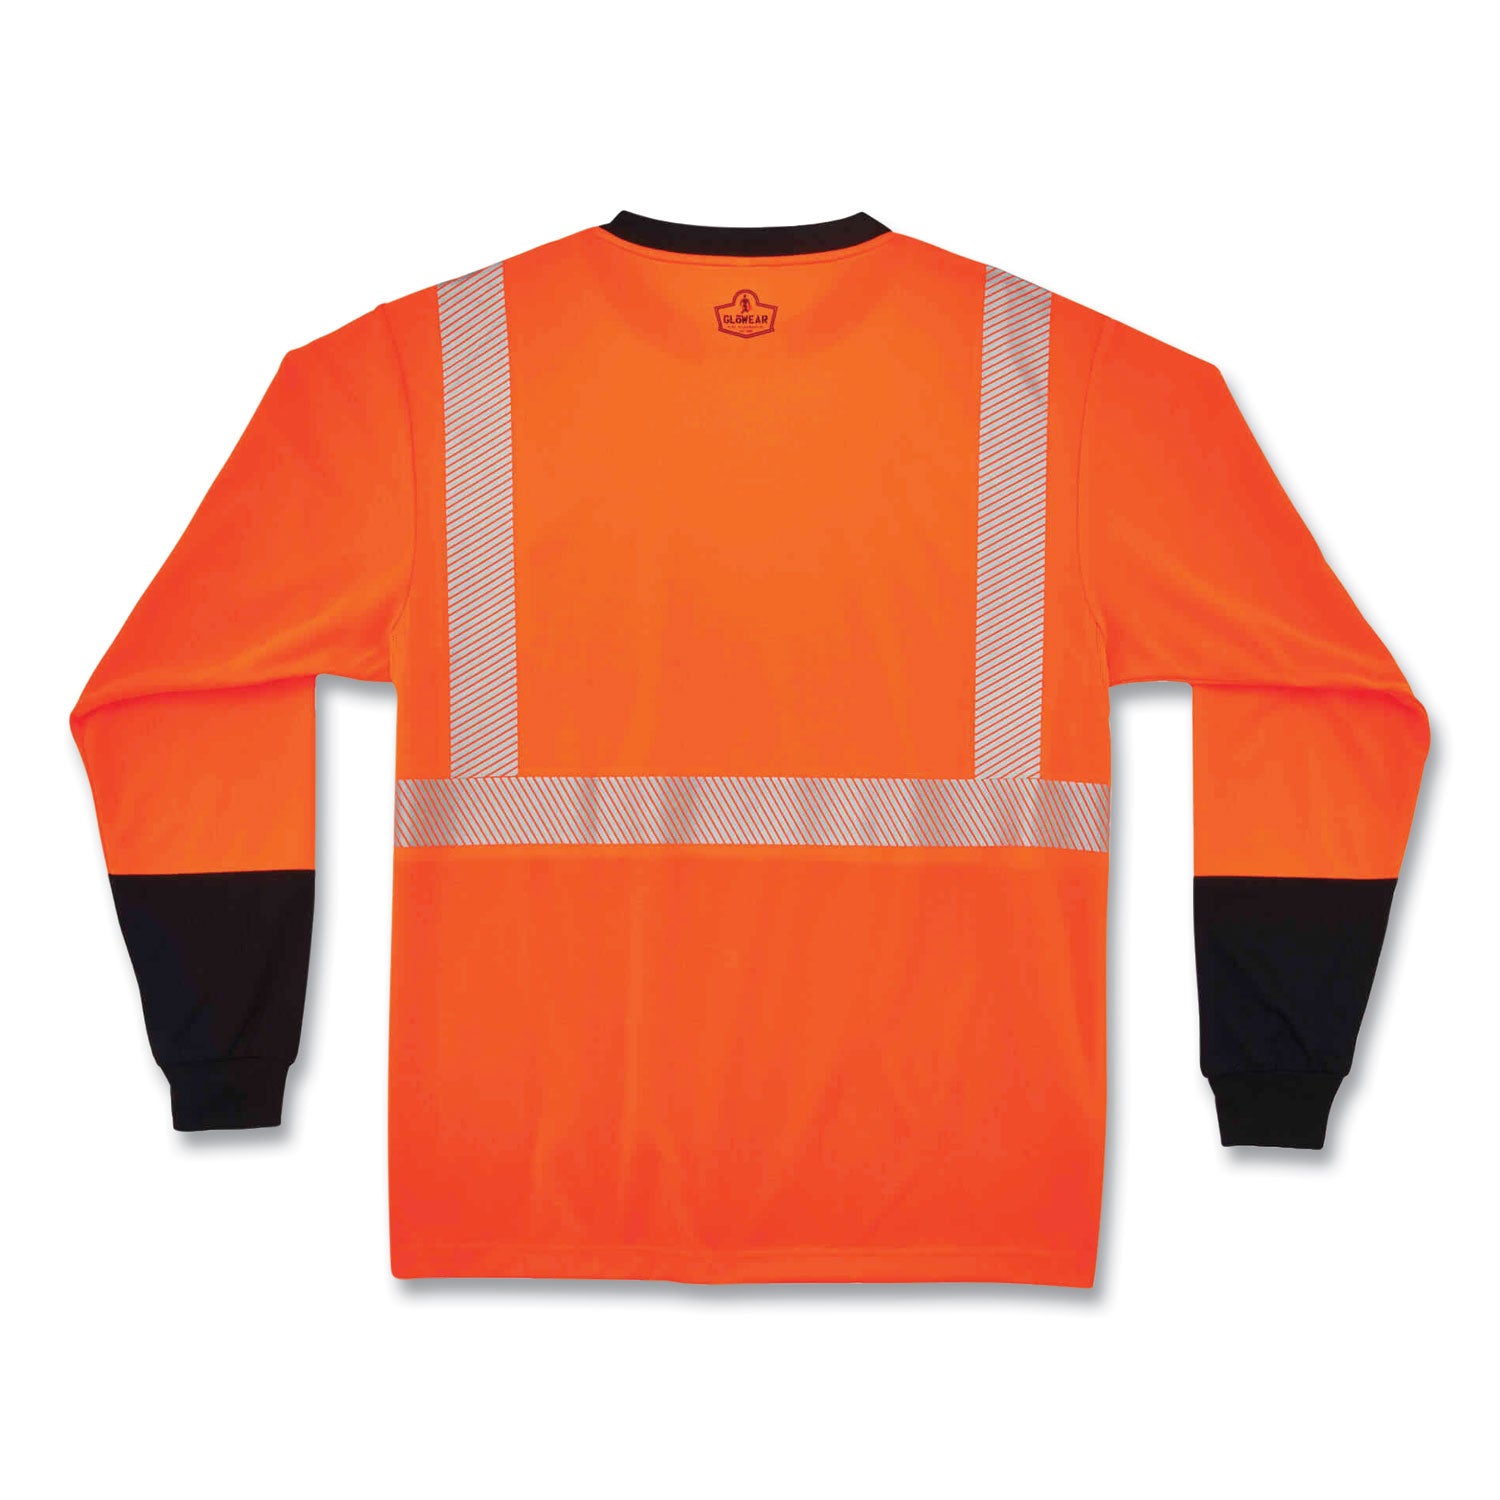 glowear-8281bk-class-2-long-sleeve-shirt-with-black-bottom-polyester-3x-large-orange-ships-in-1-3-business-days_ego22687 - 3